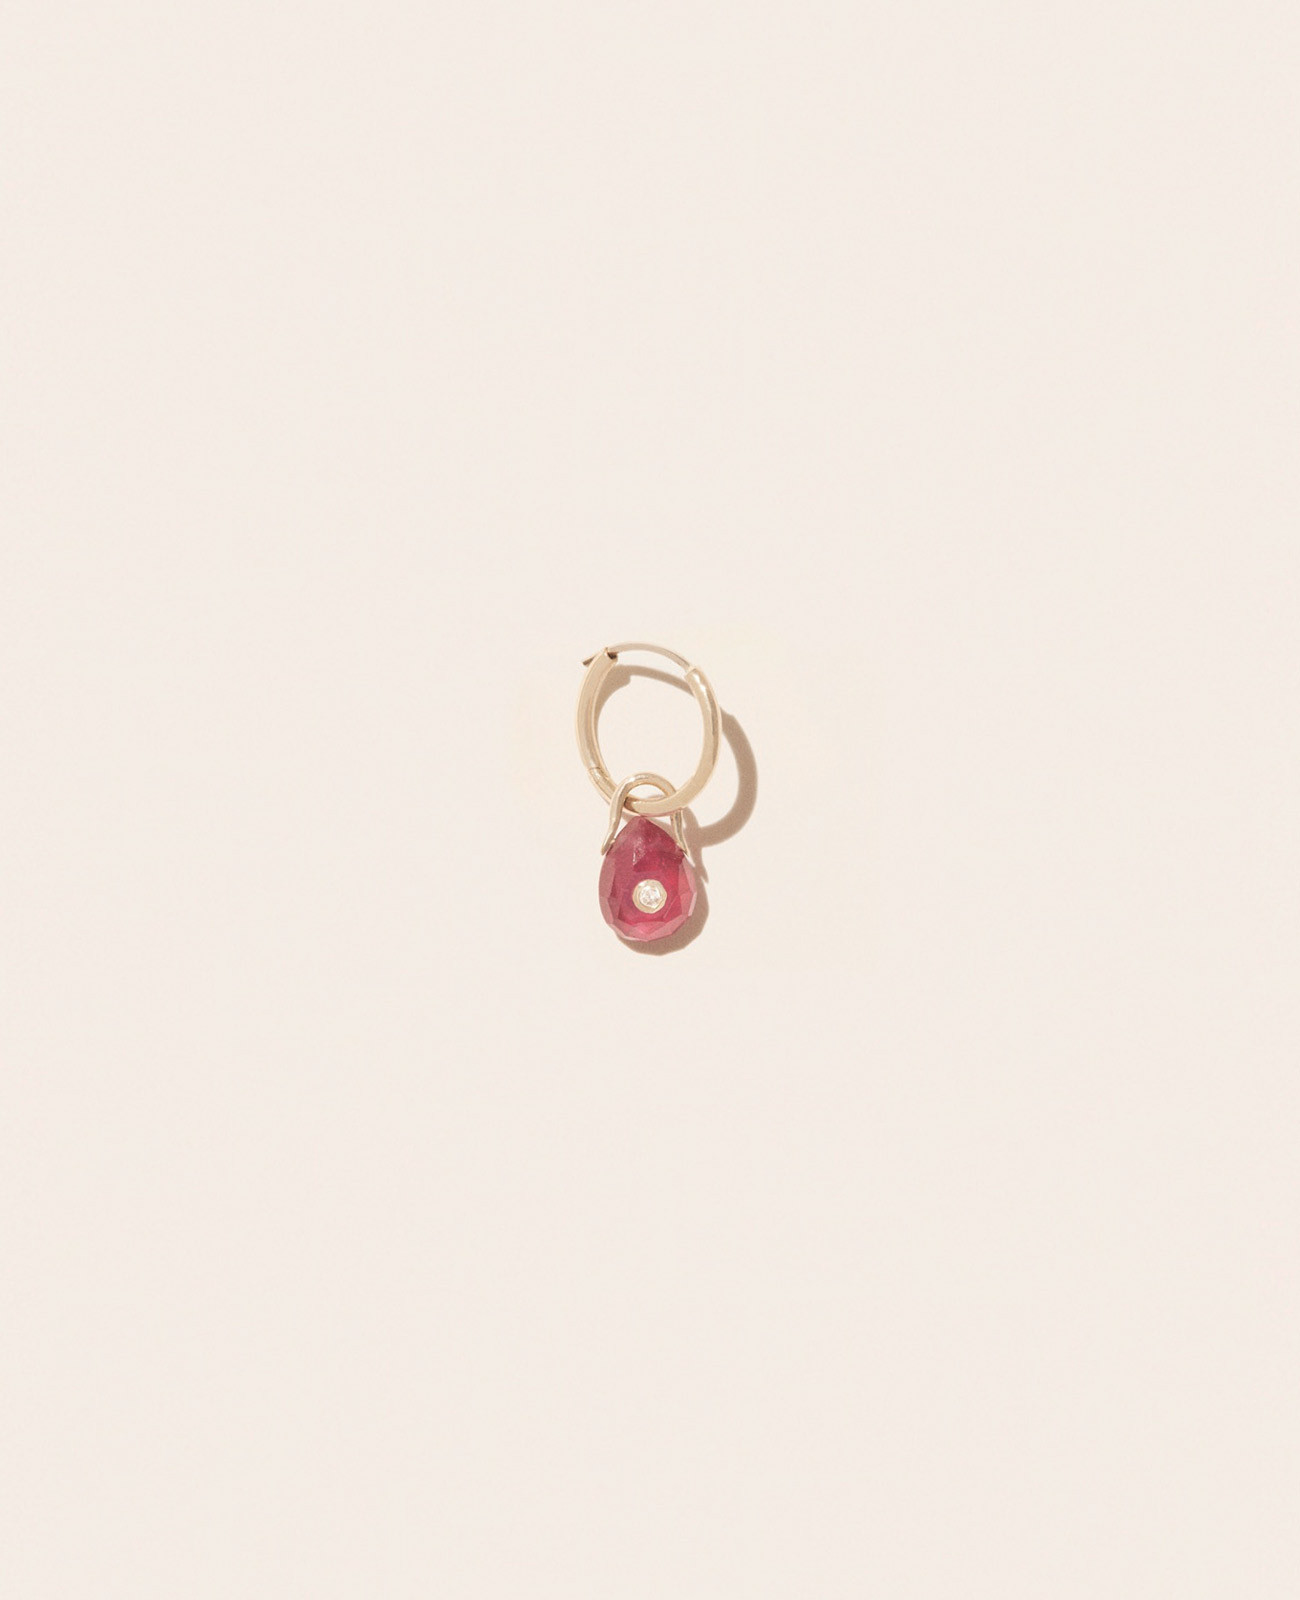 ORSO RUBY earring pascale monvoisin jewelry paris